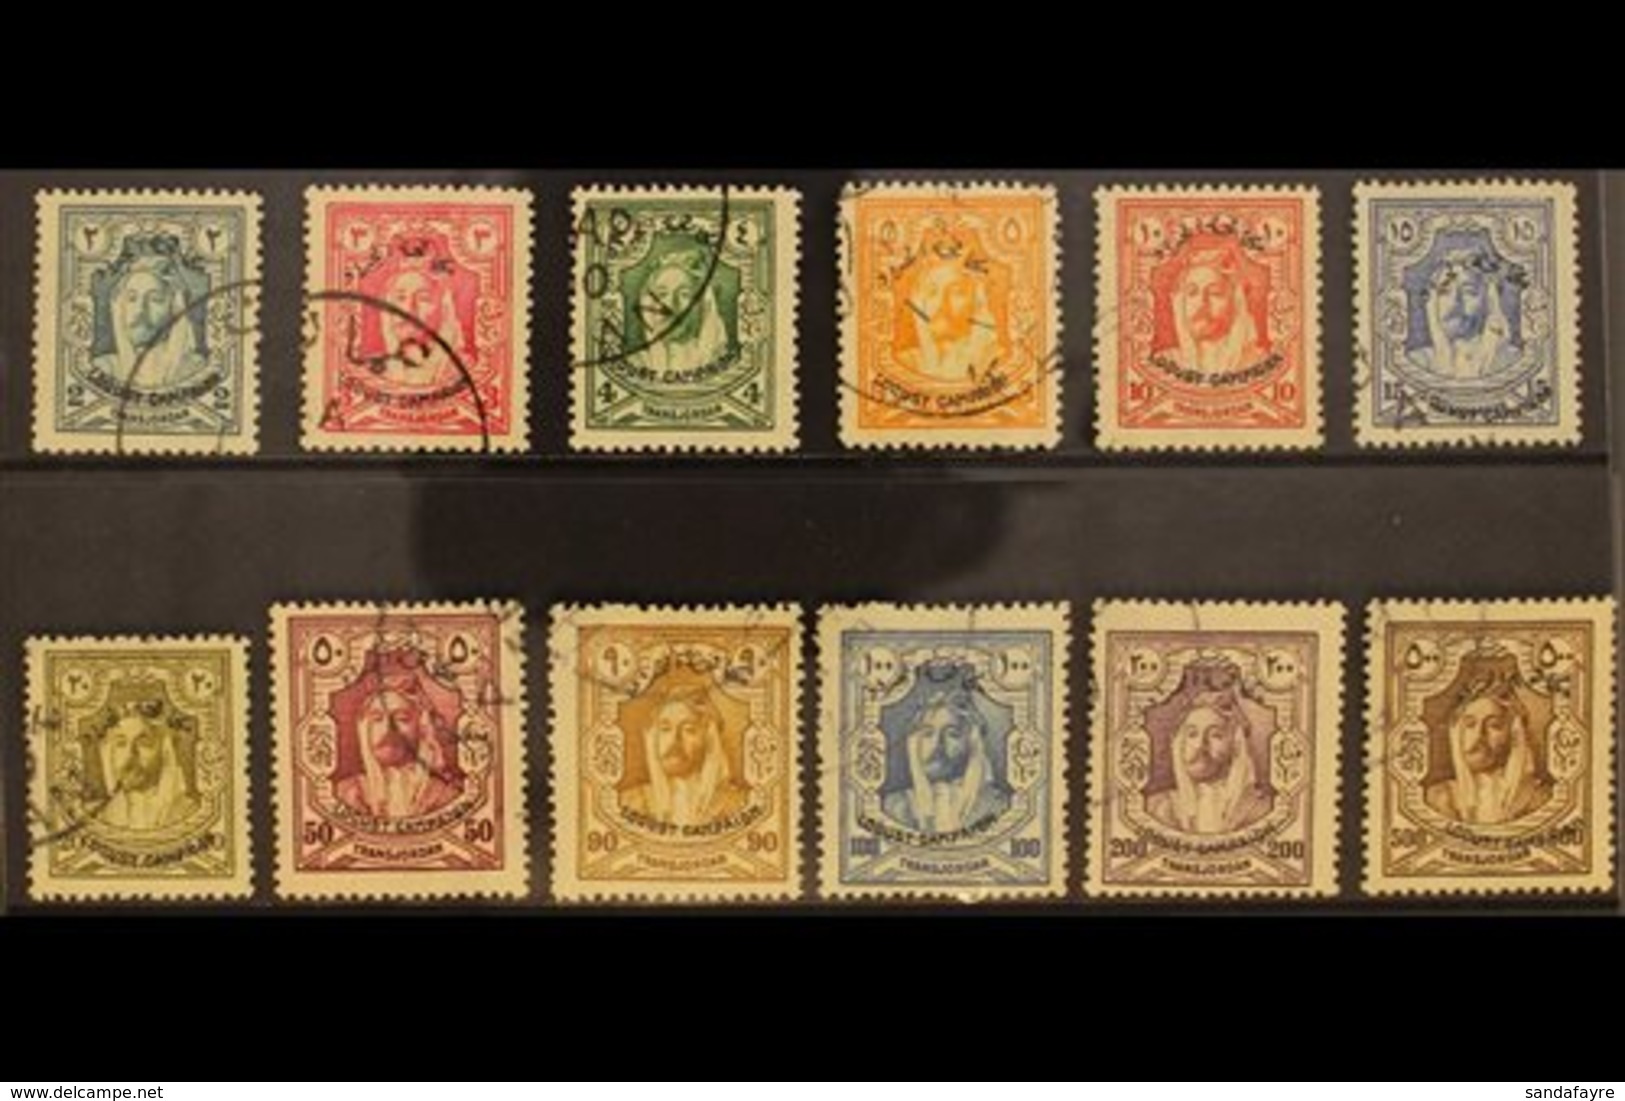 1930 LOCUST CAMPAIGN  Emir "Locust Campaign" Overprinted Set, SG 183/94, Fine Used (12 Stamps) For More Images, Please V - Jordanien